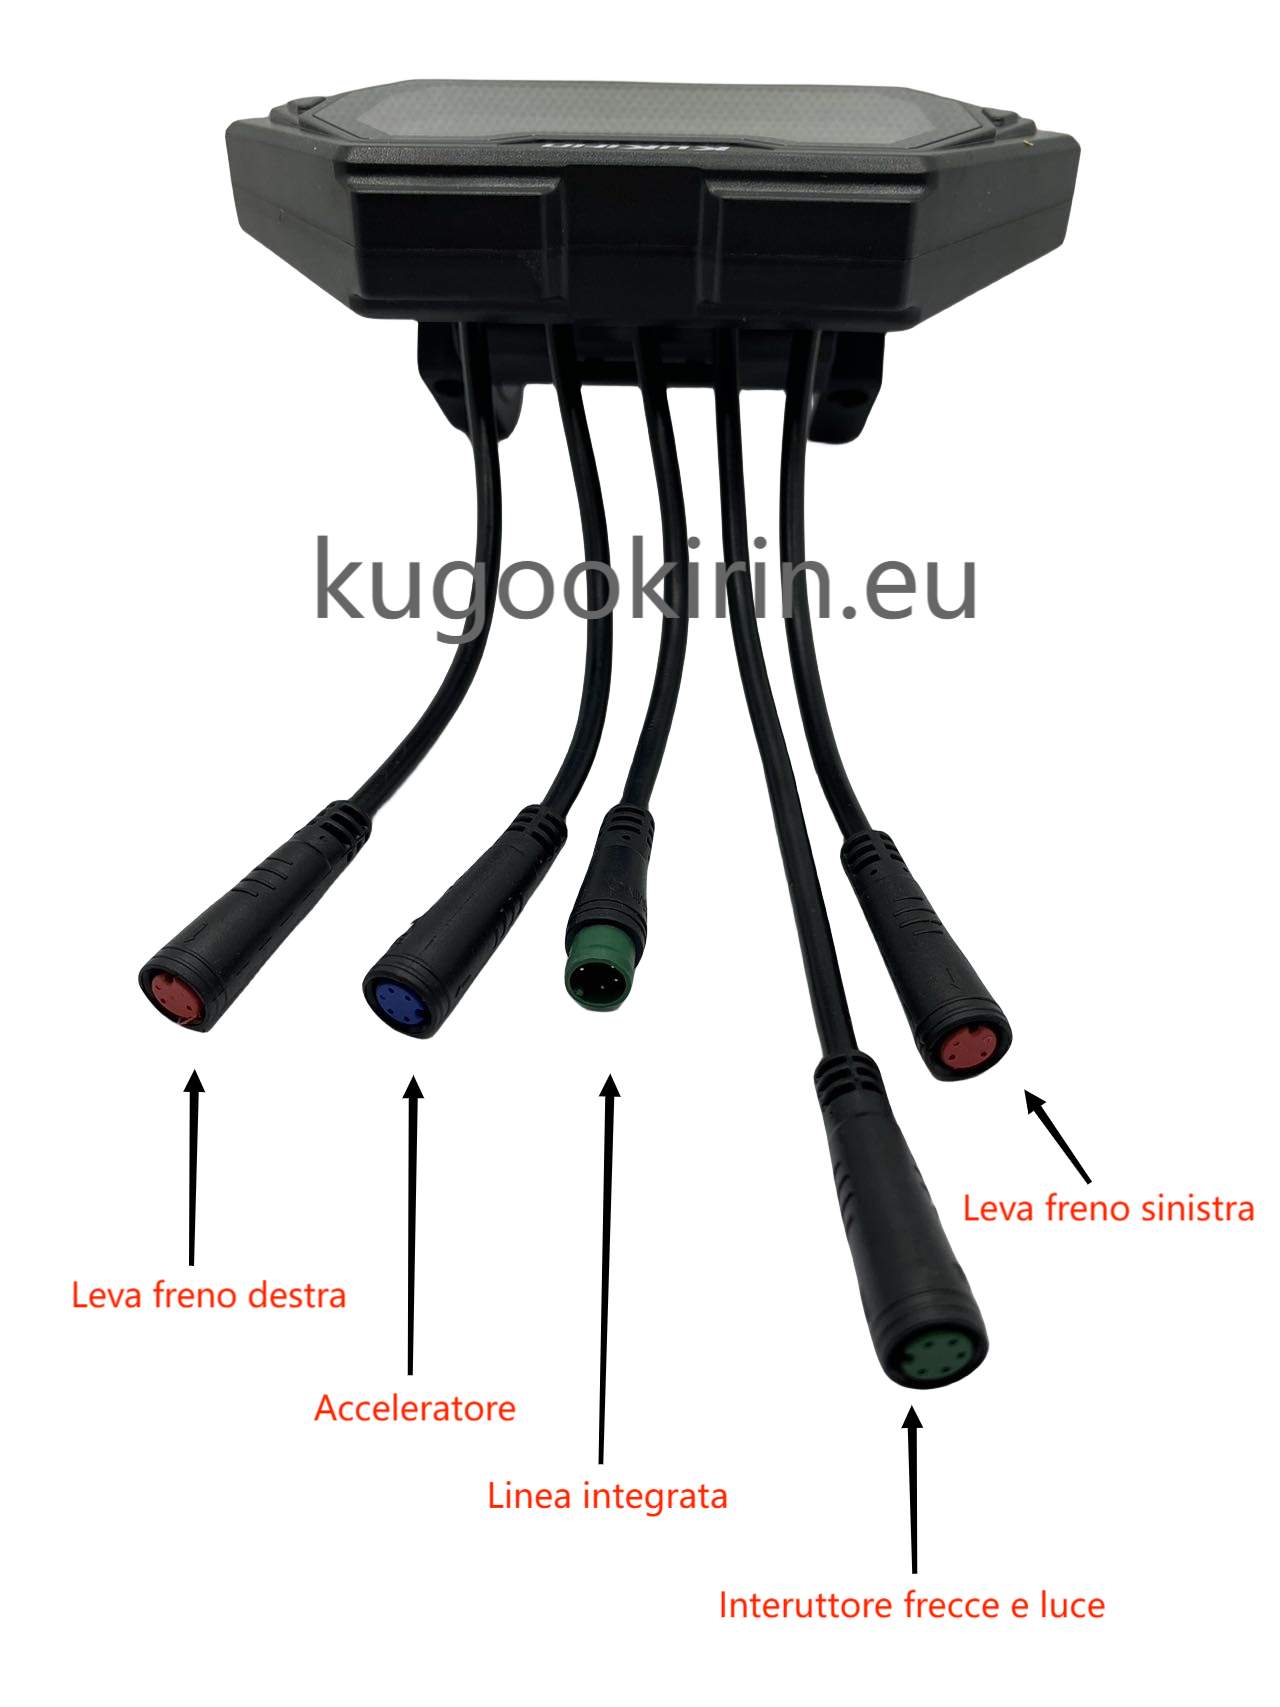 Display (accelaratore con 4 Pin) ORIGINALE per Kugoo Kukirin G2 Pro e G2 Max